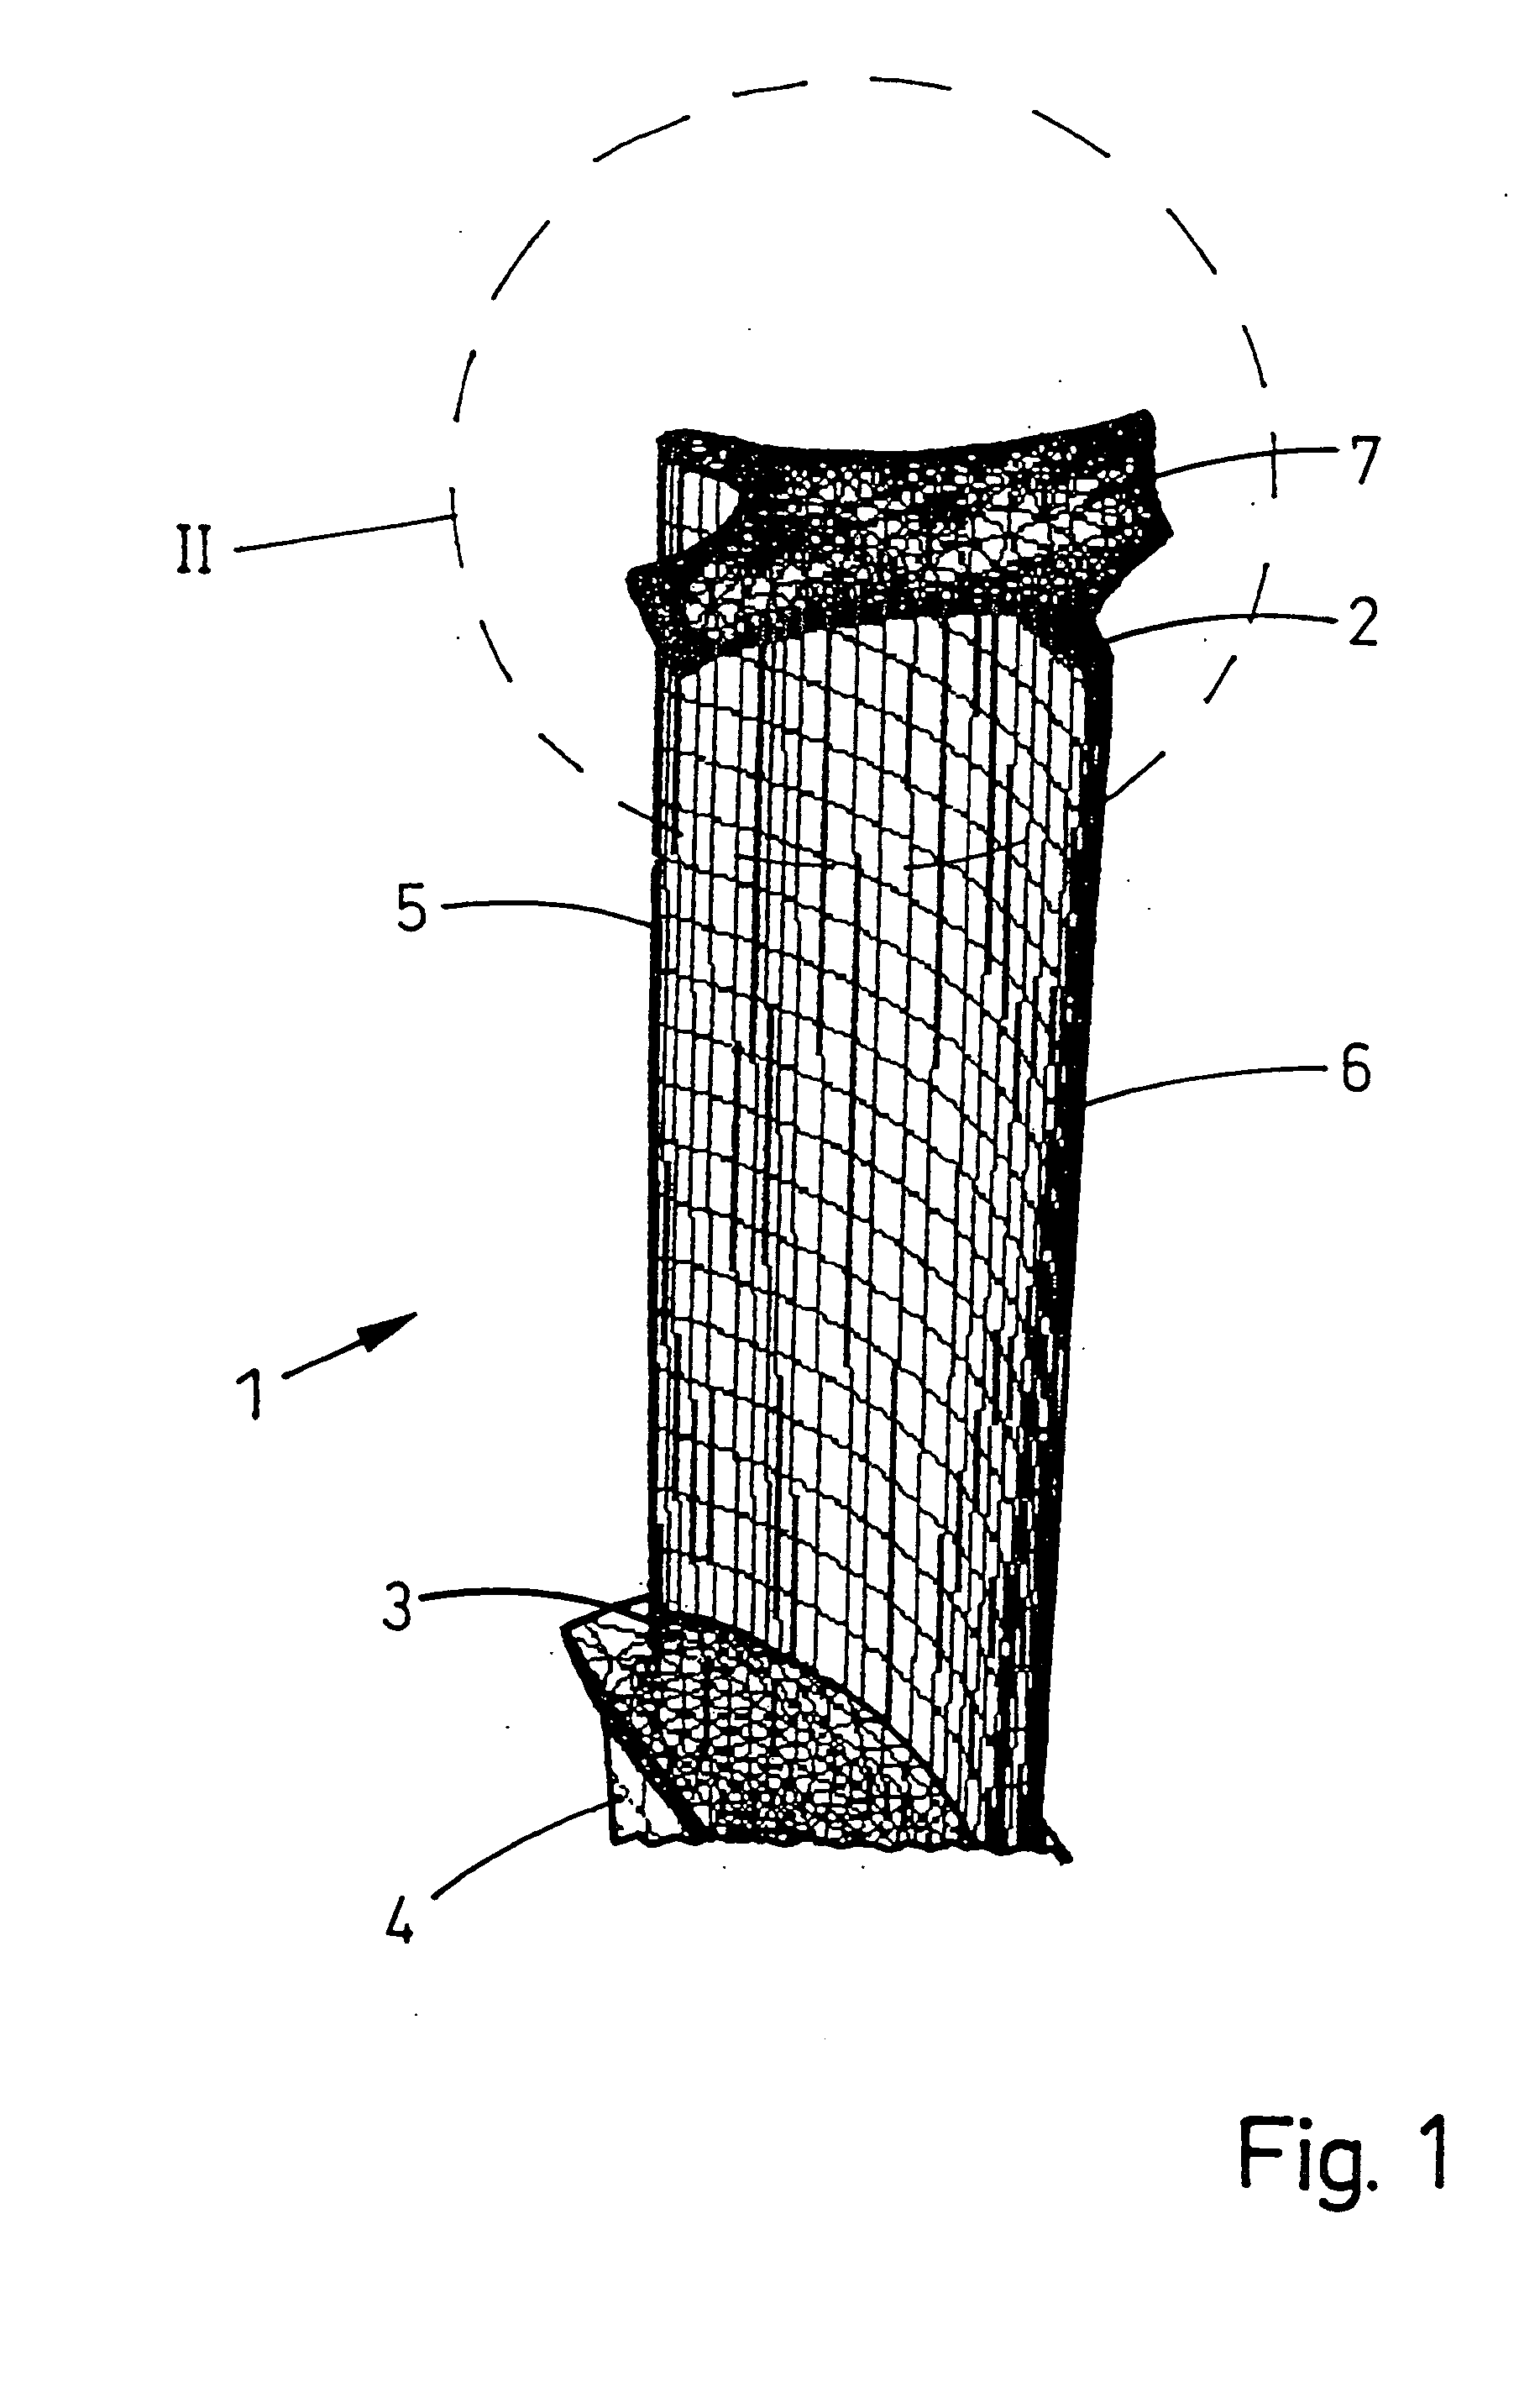 Method of modifying the coupling geometry in shroud band segments of turbine moving blades